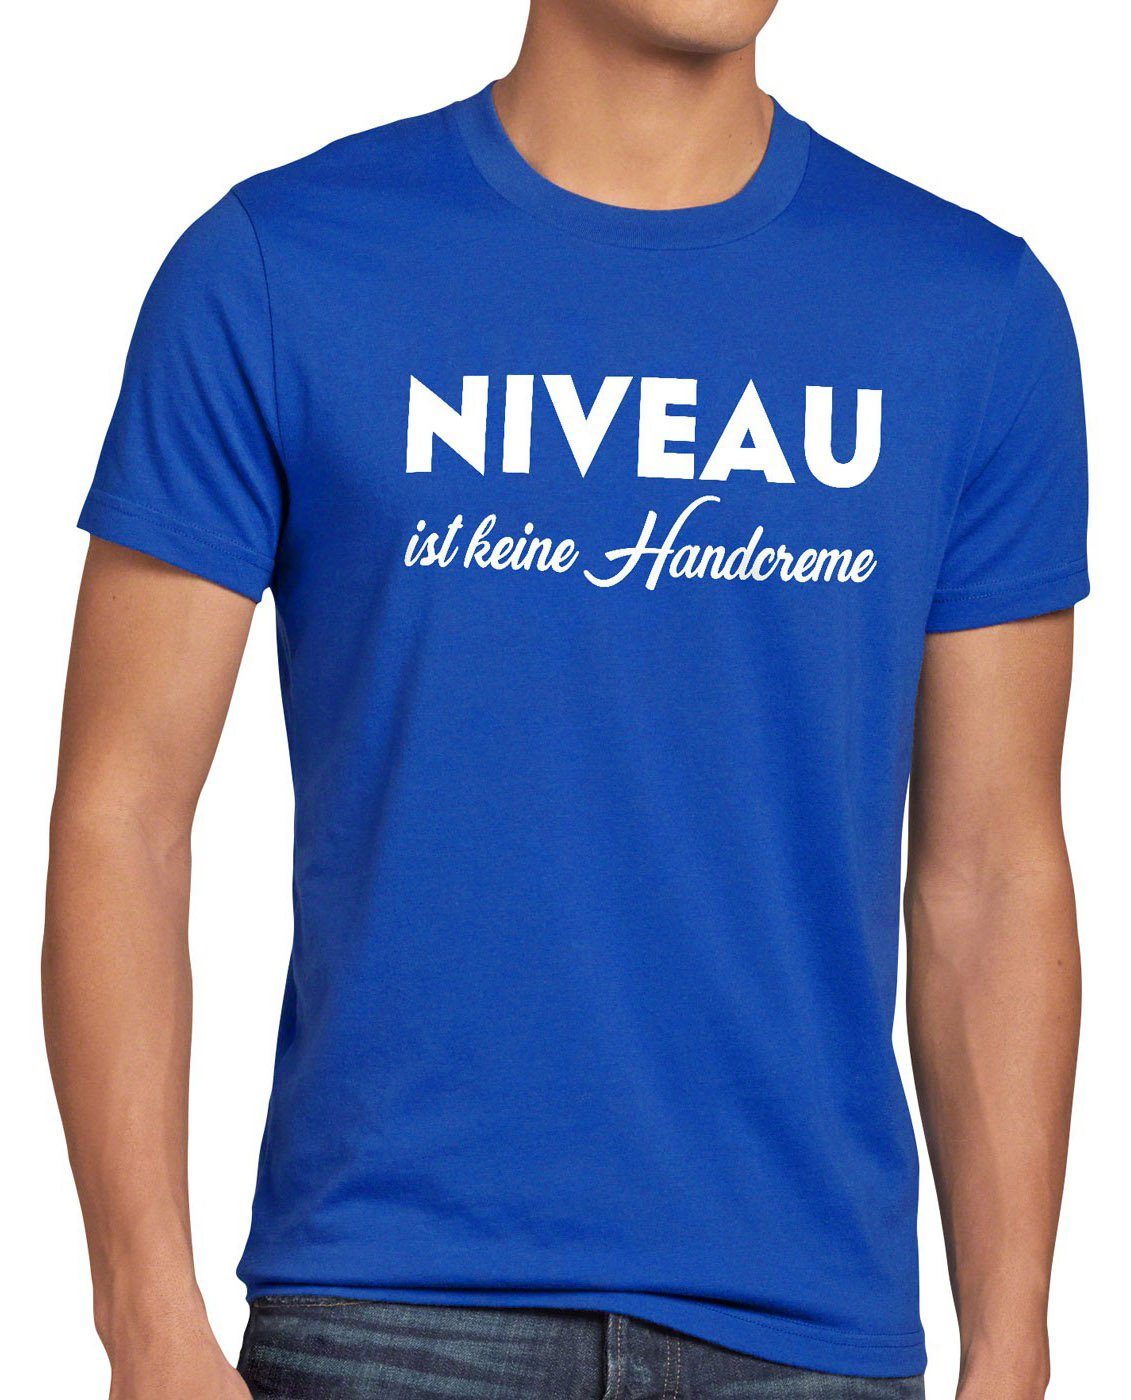 style3 Print-Shirt Herren T-Shirt Niveau ist keine Handcreme Creme Funshirt Spruch nivea fun lustig blau